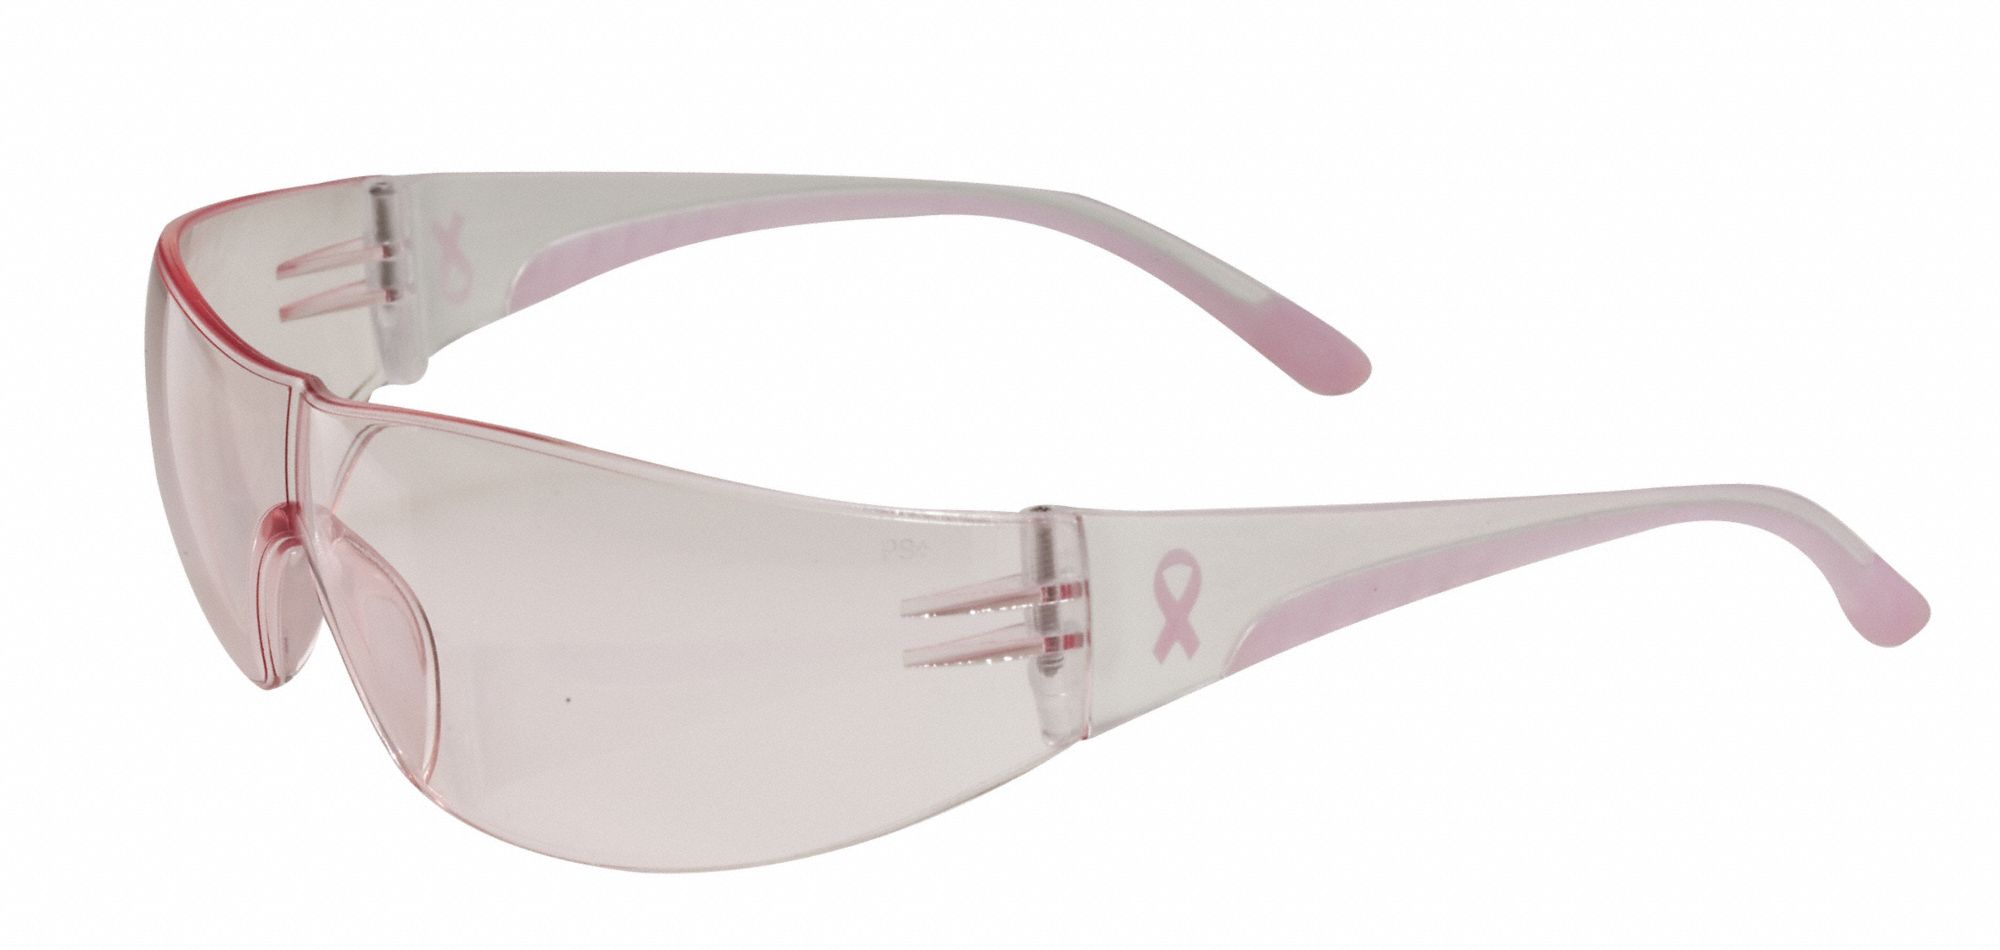 Safety Glasses Pink 250 10 0904 Ebay